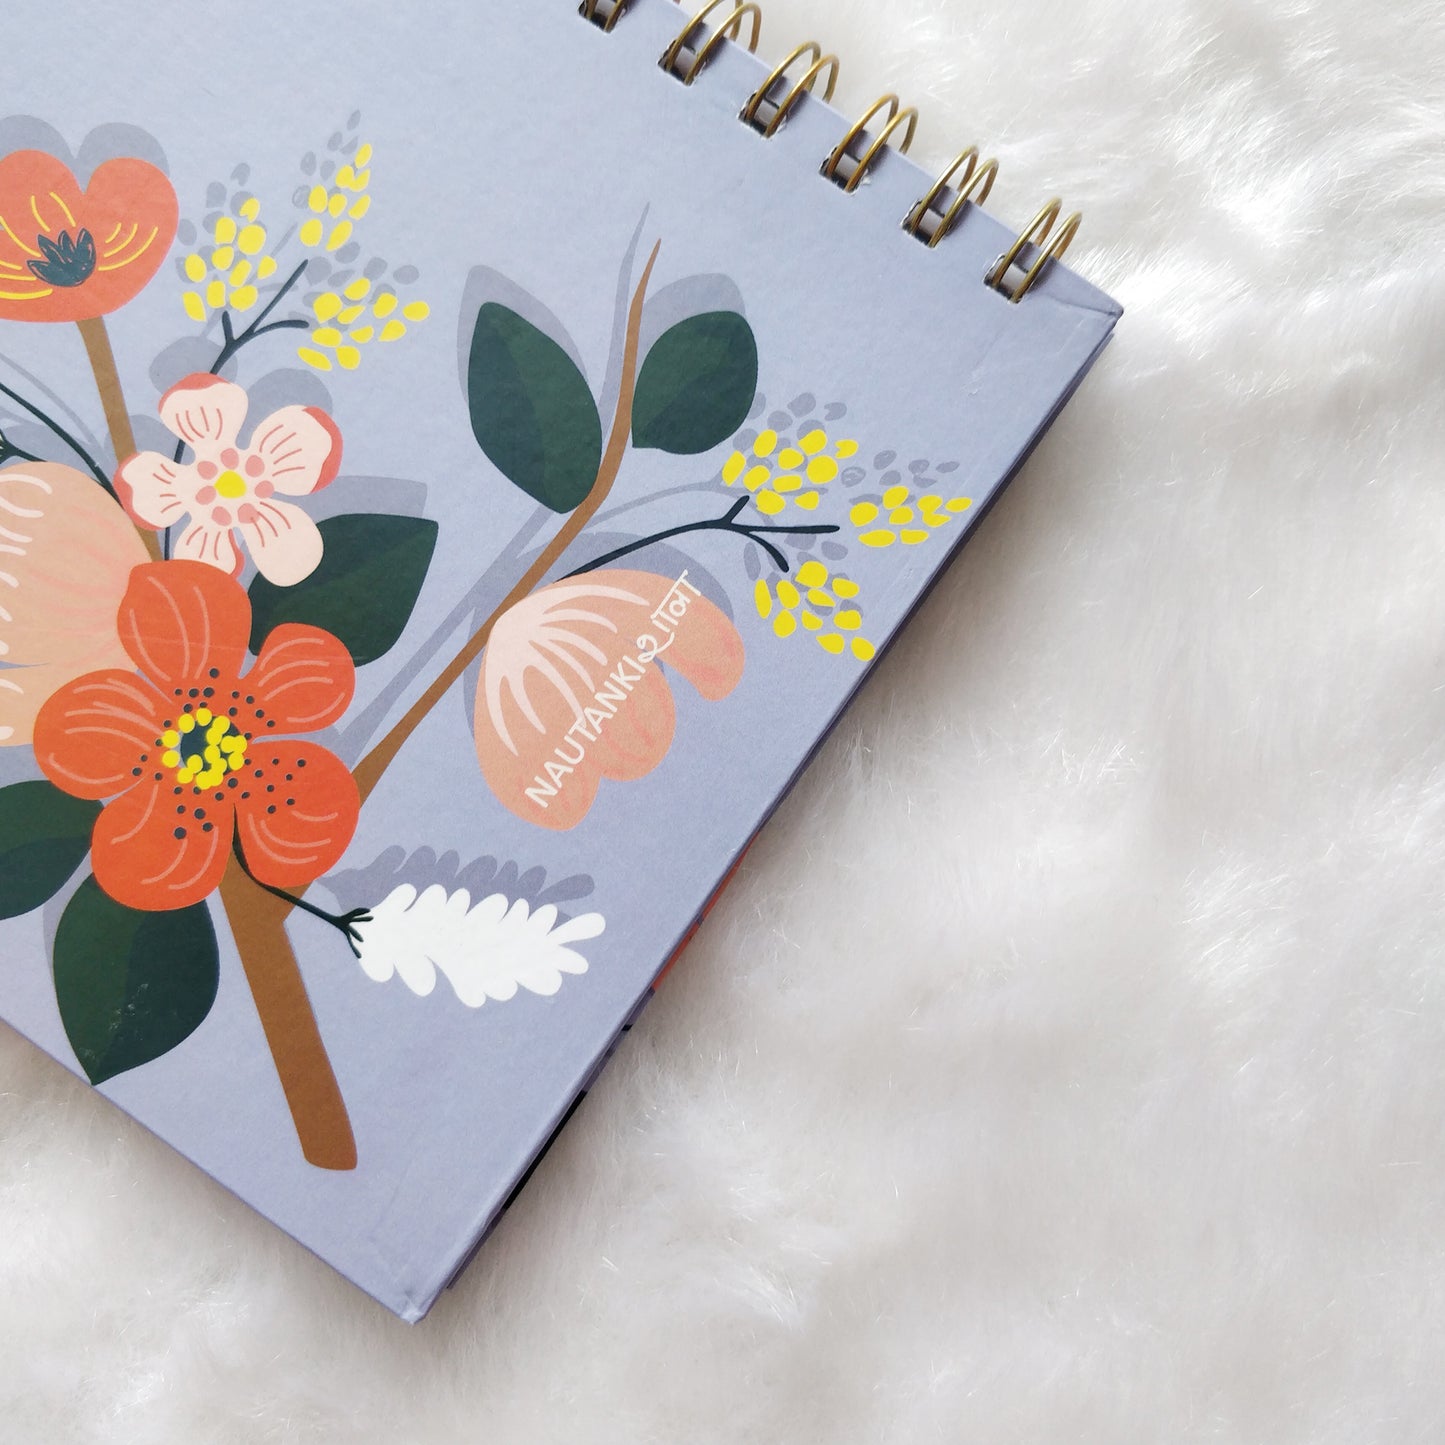 Floral Fantasy Notebook - Blue - Nautankishaala